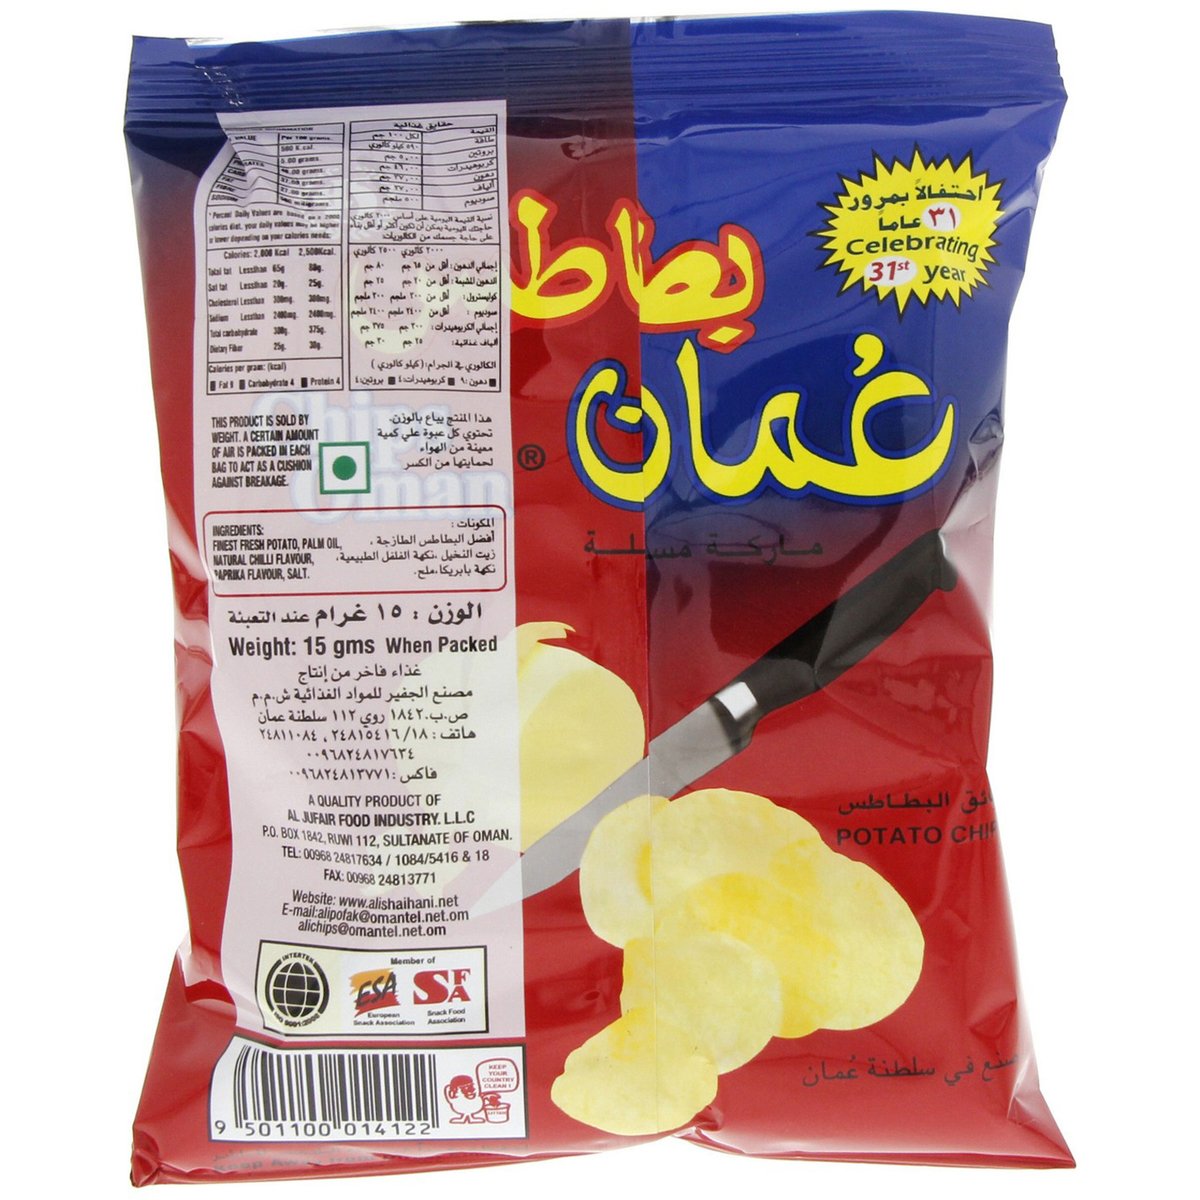 بطاطس شيبس عمان 24 × 15 جم